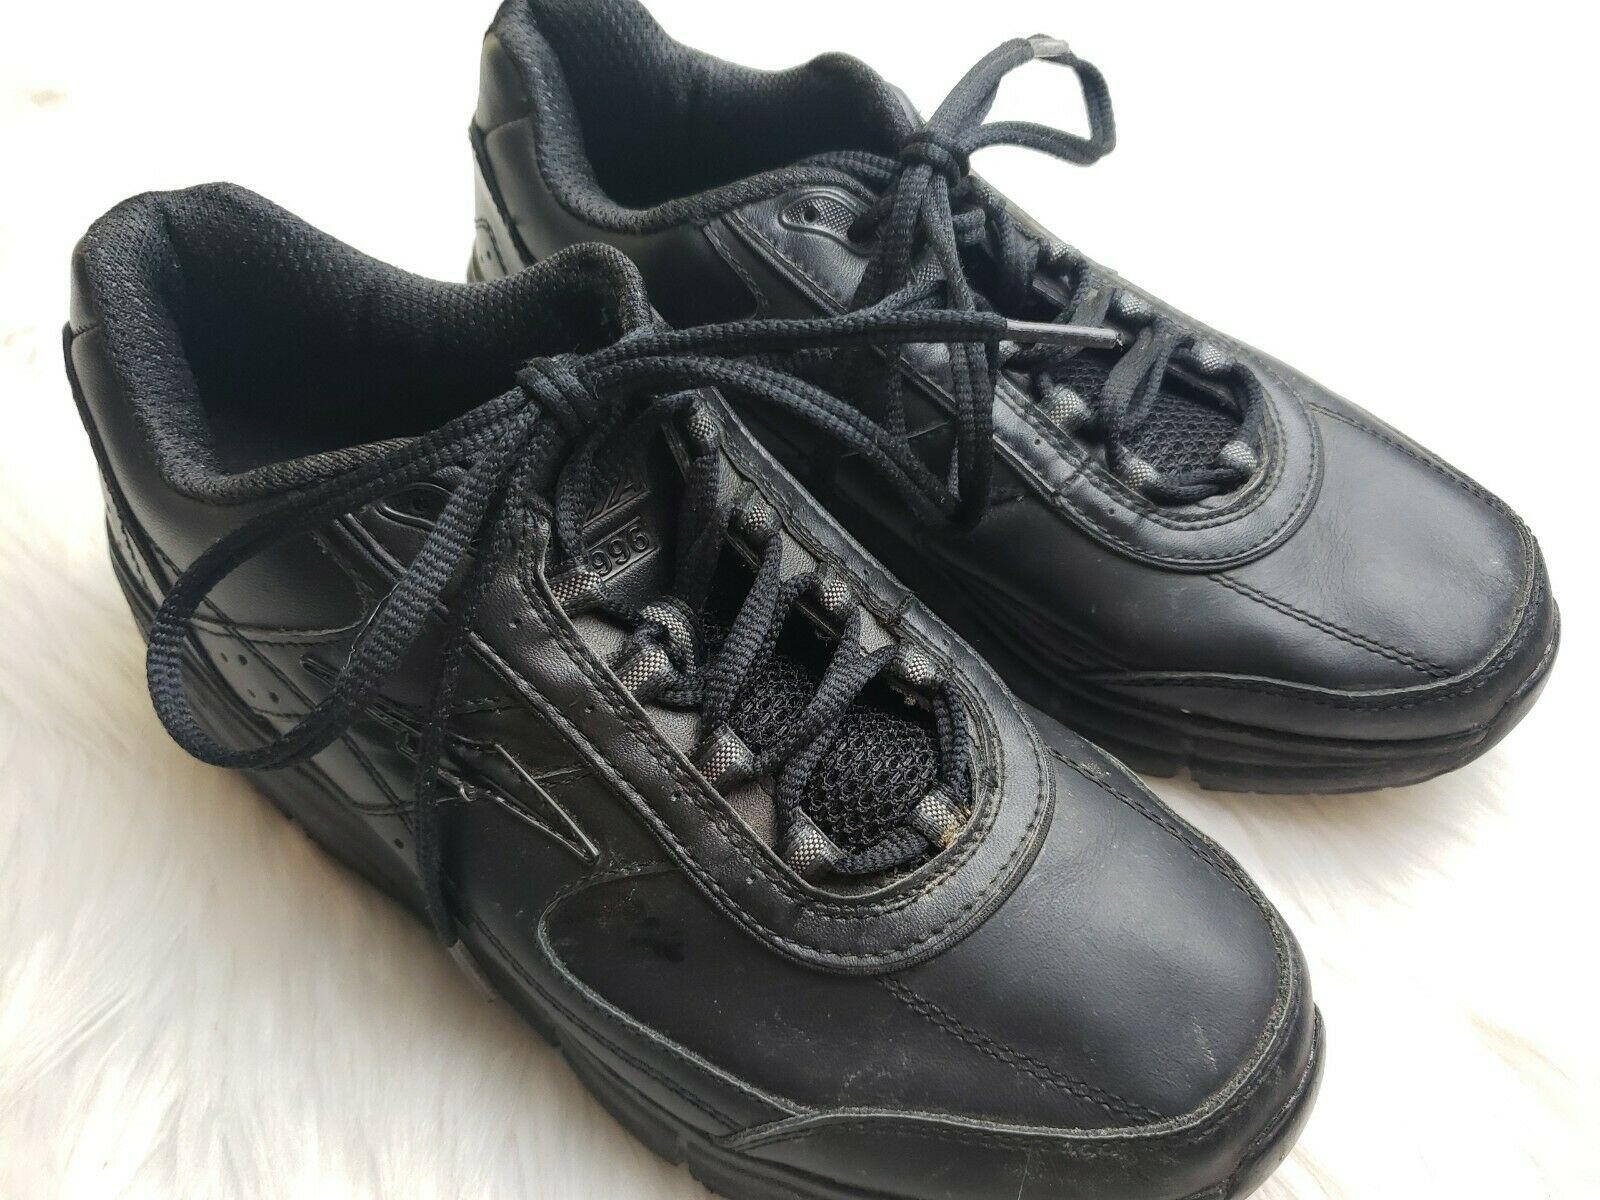 Avia Mens Walking Shoes Black AH512-9 Lace Up Low Top Oil & Slip Resistant 8.5 M